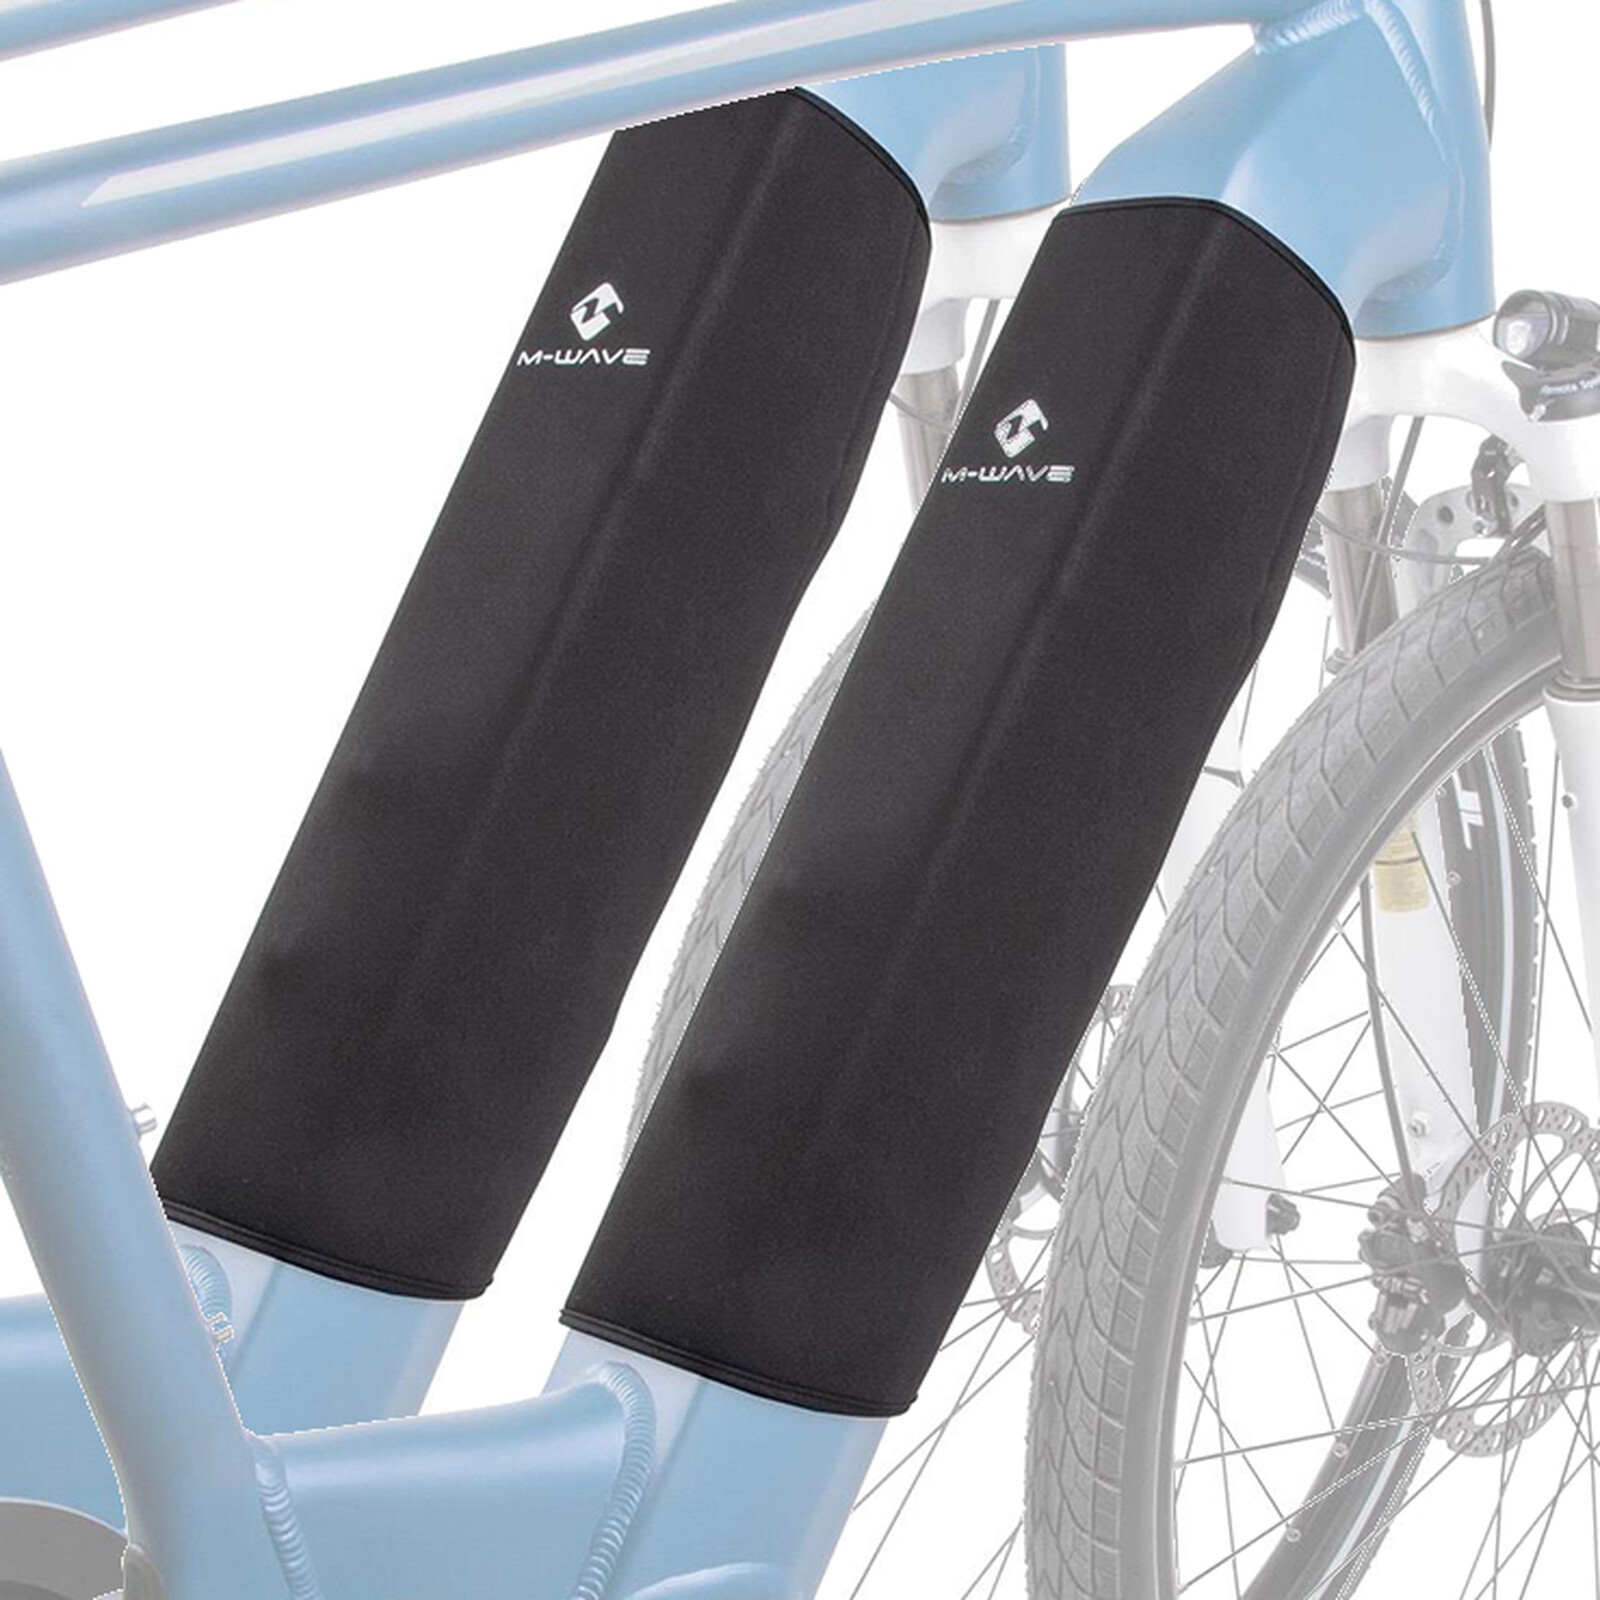 https://www.radversender.de/media/image/product/14416/lg/2-stueck-m-wave-e-protect-wrap-akku-fahrrad-batterie-schutz-huelle-e-bike-420mm-spar-set.jpg